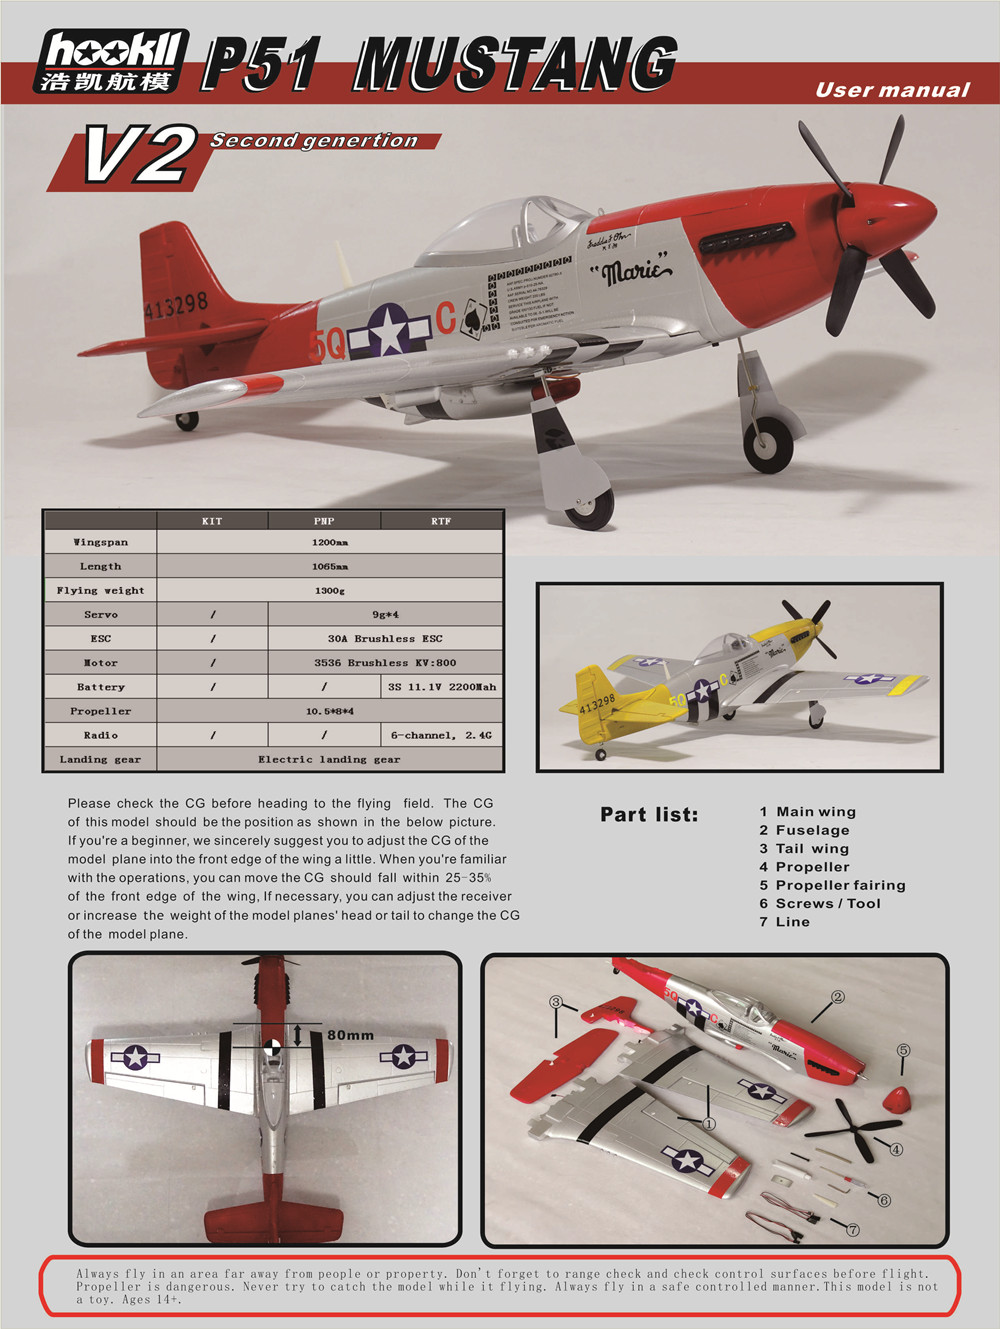 Hookll-Mustang-P51-V2-EPO-1200mm-Wingspan-RC-Airplane-Fixed-Wing-KITPNP-1560977-5